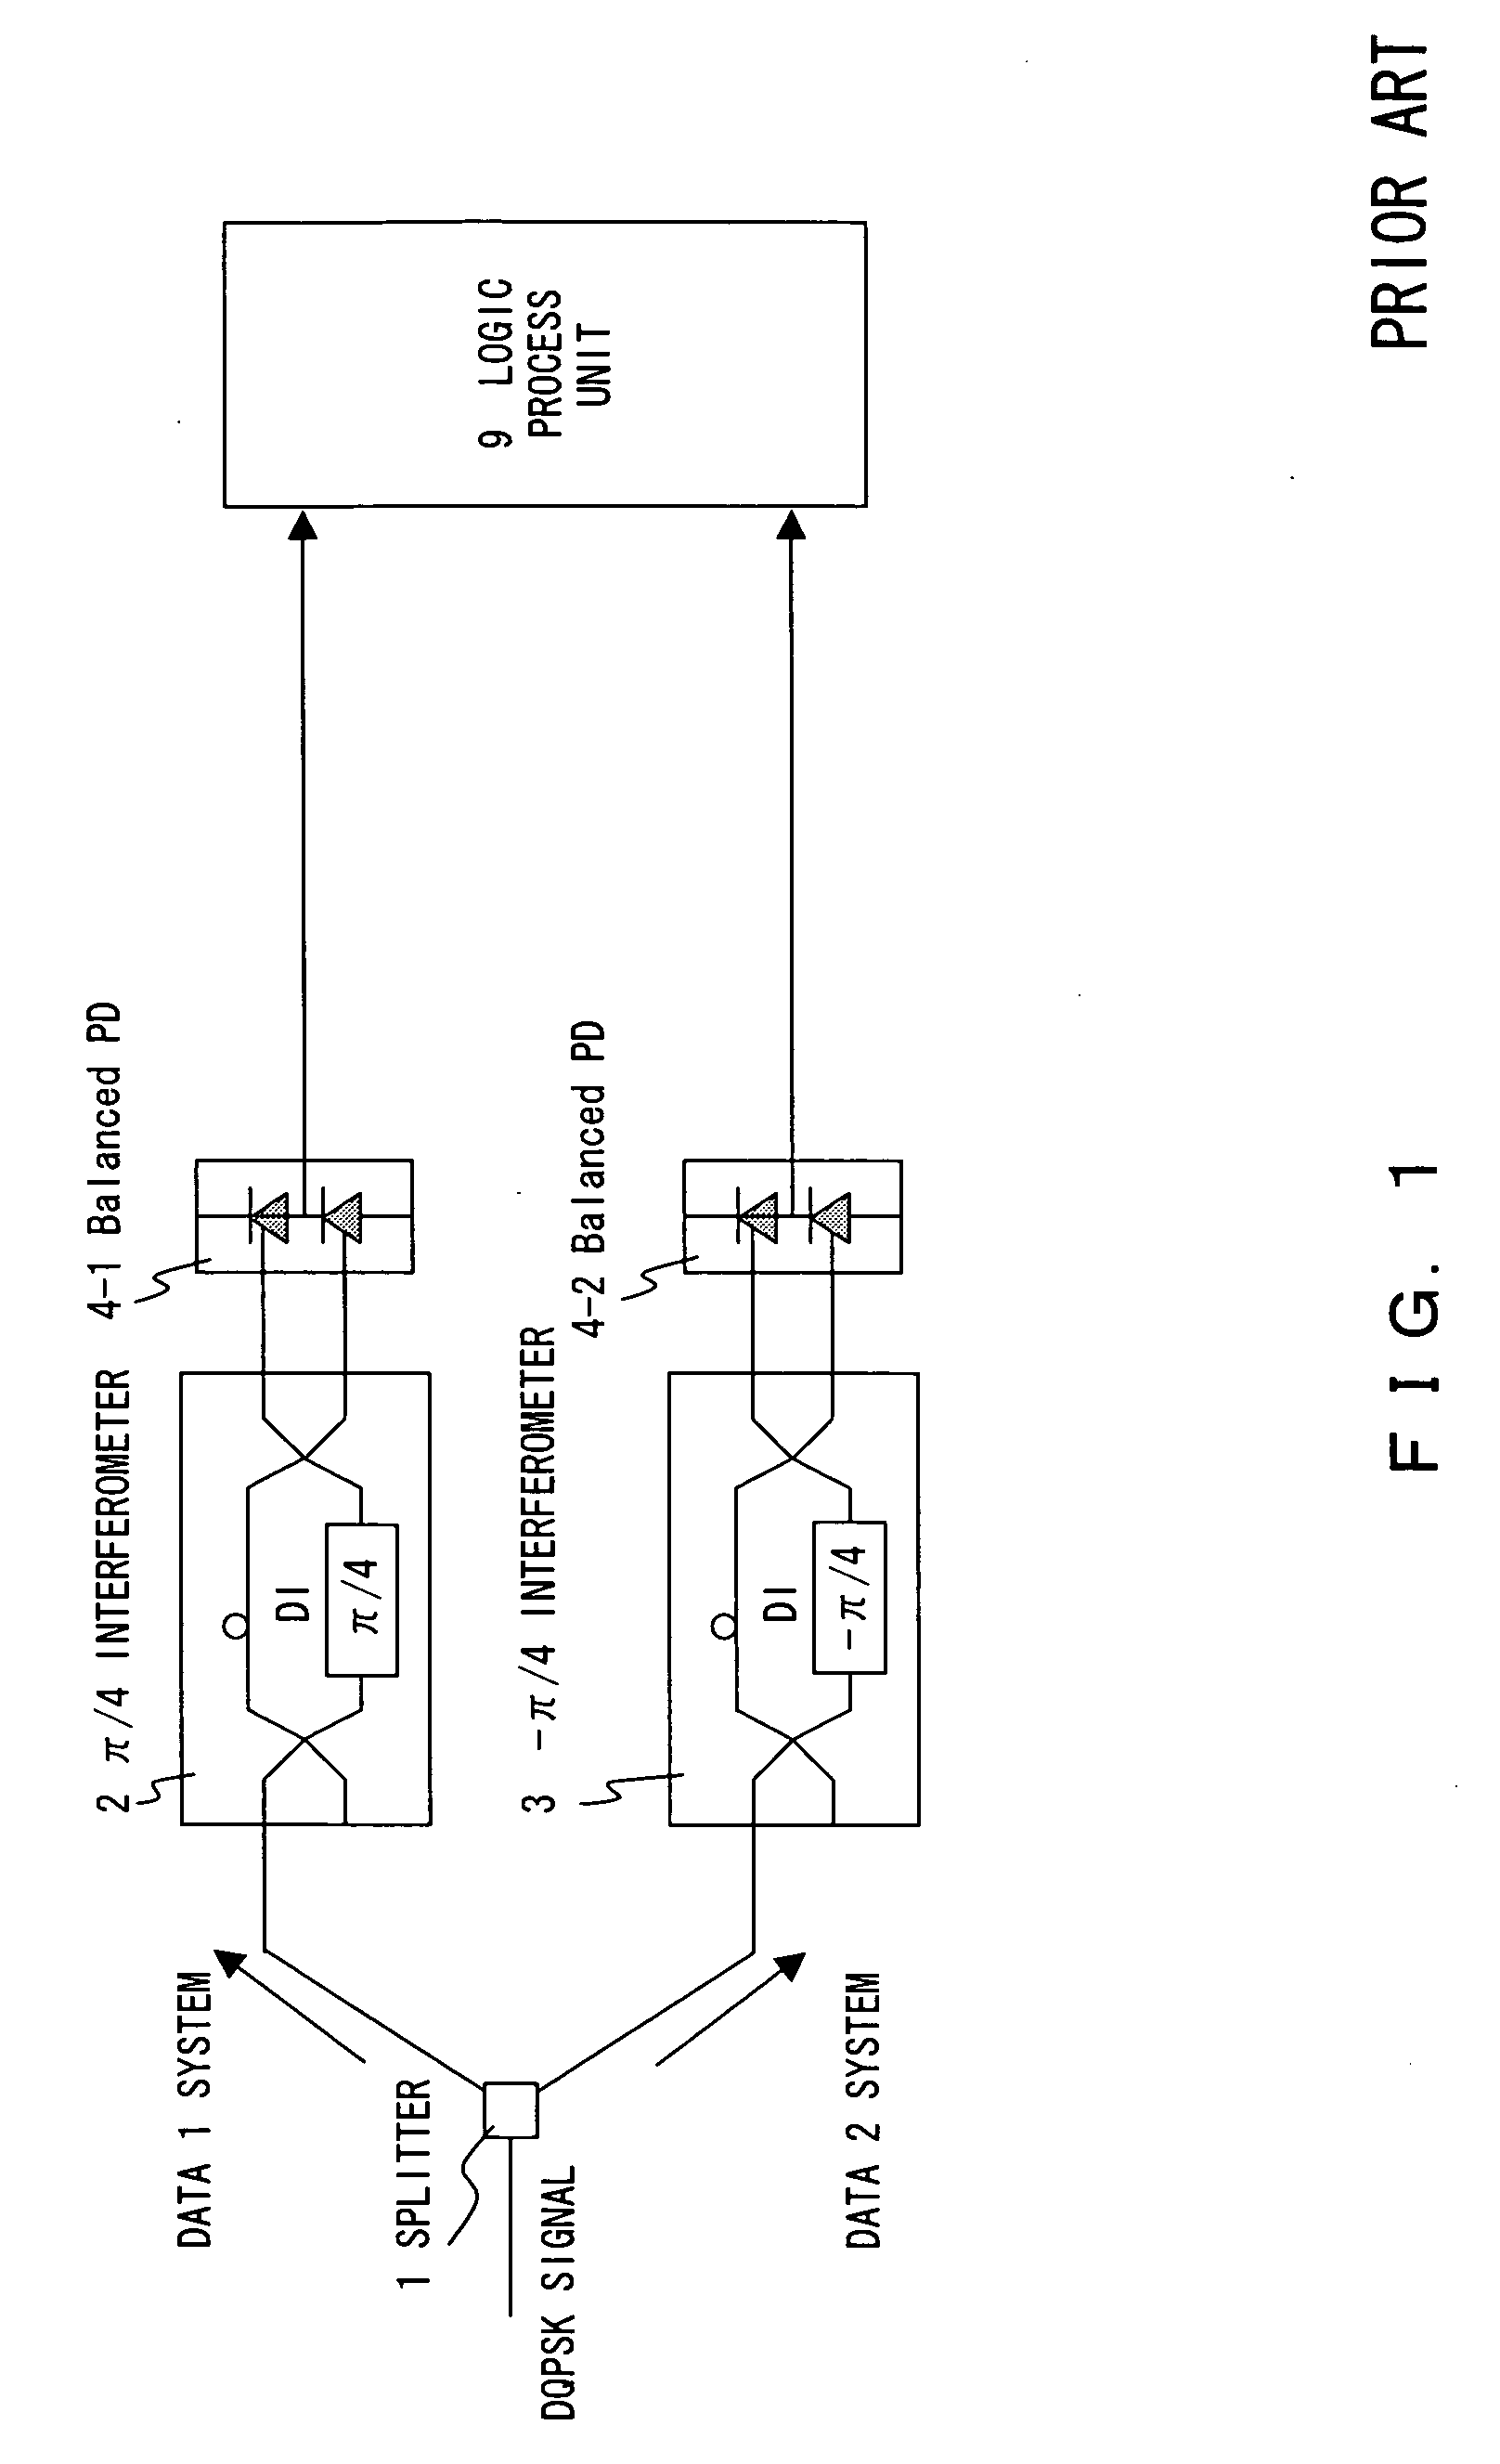 DQPSK optical receiver circuit